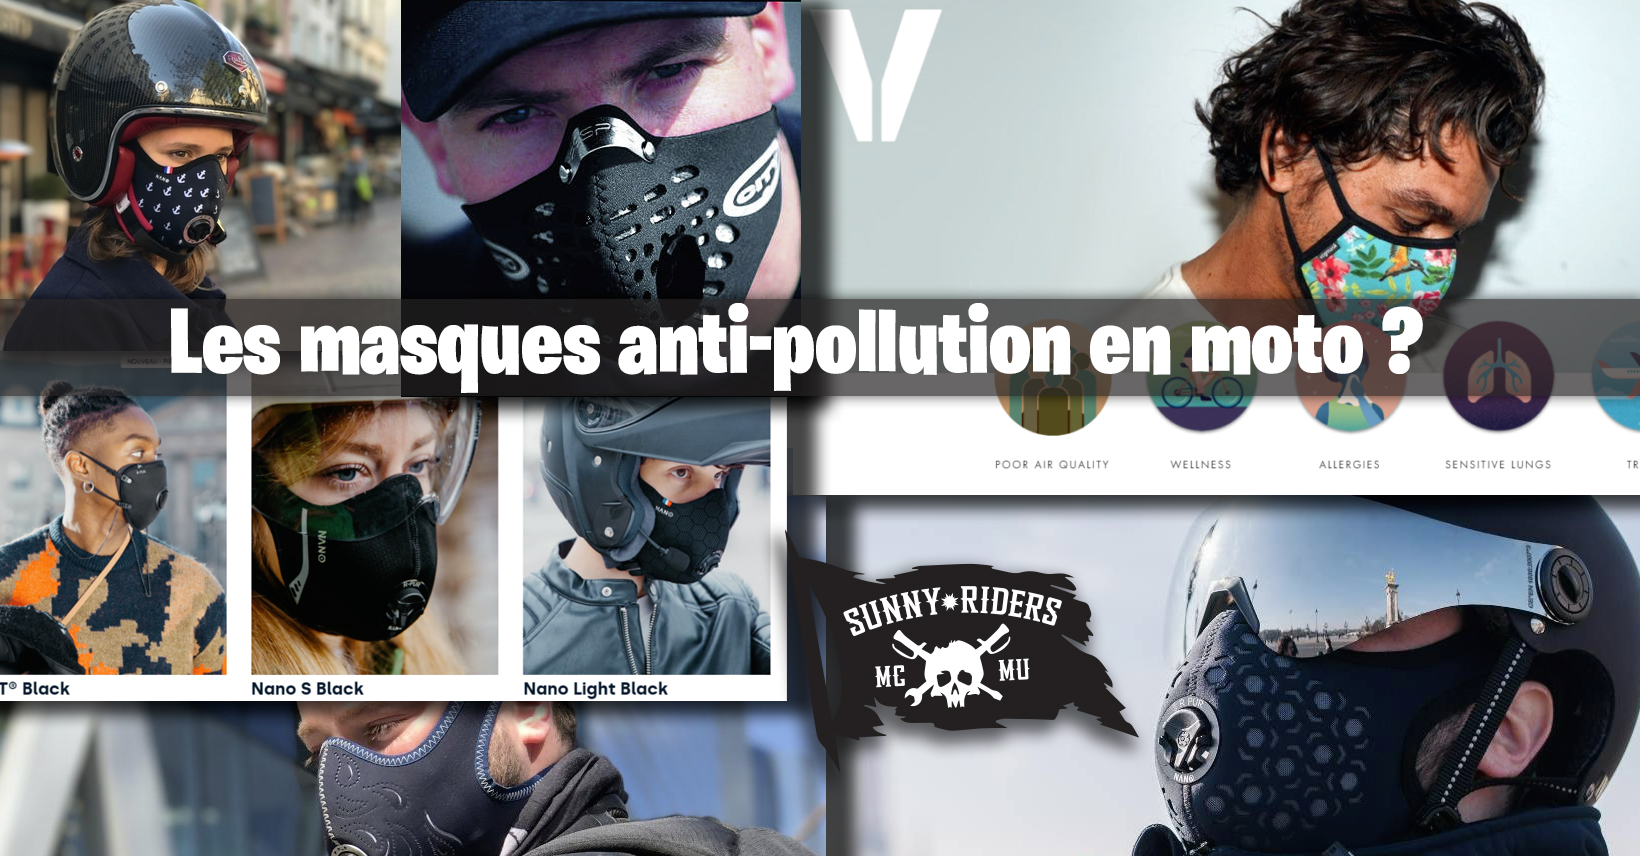 Les masques anti-pollution